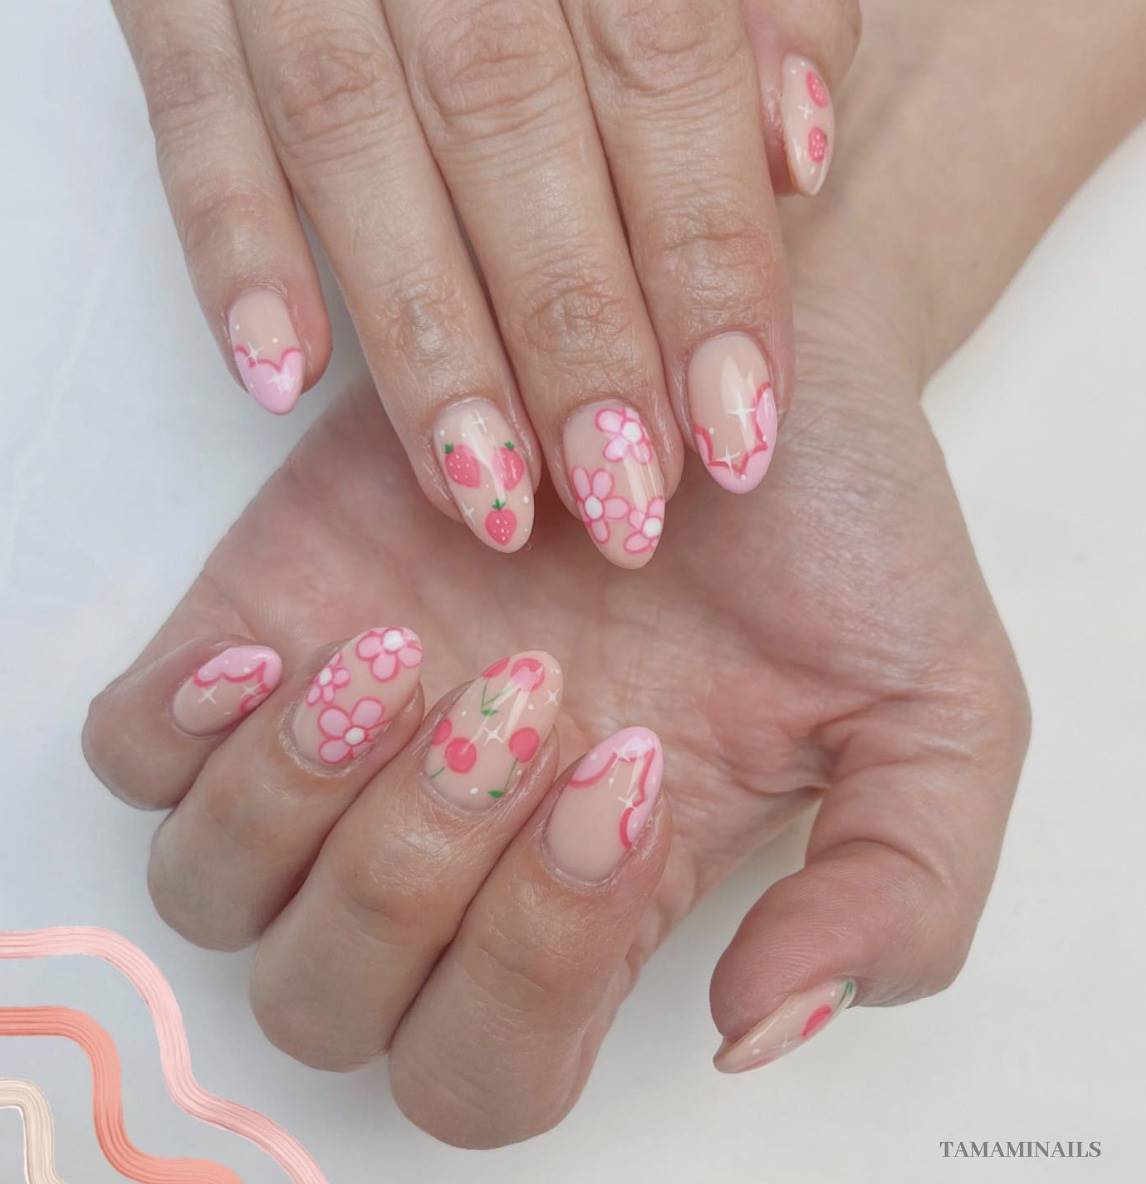 3 diseños de uñas color rosa para lucir manos elegantes  Panorama Hoy